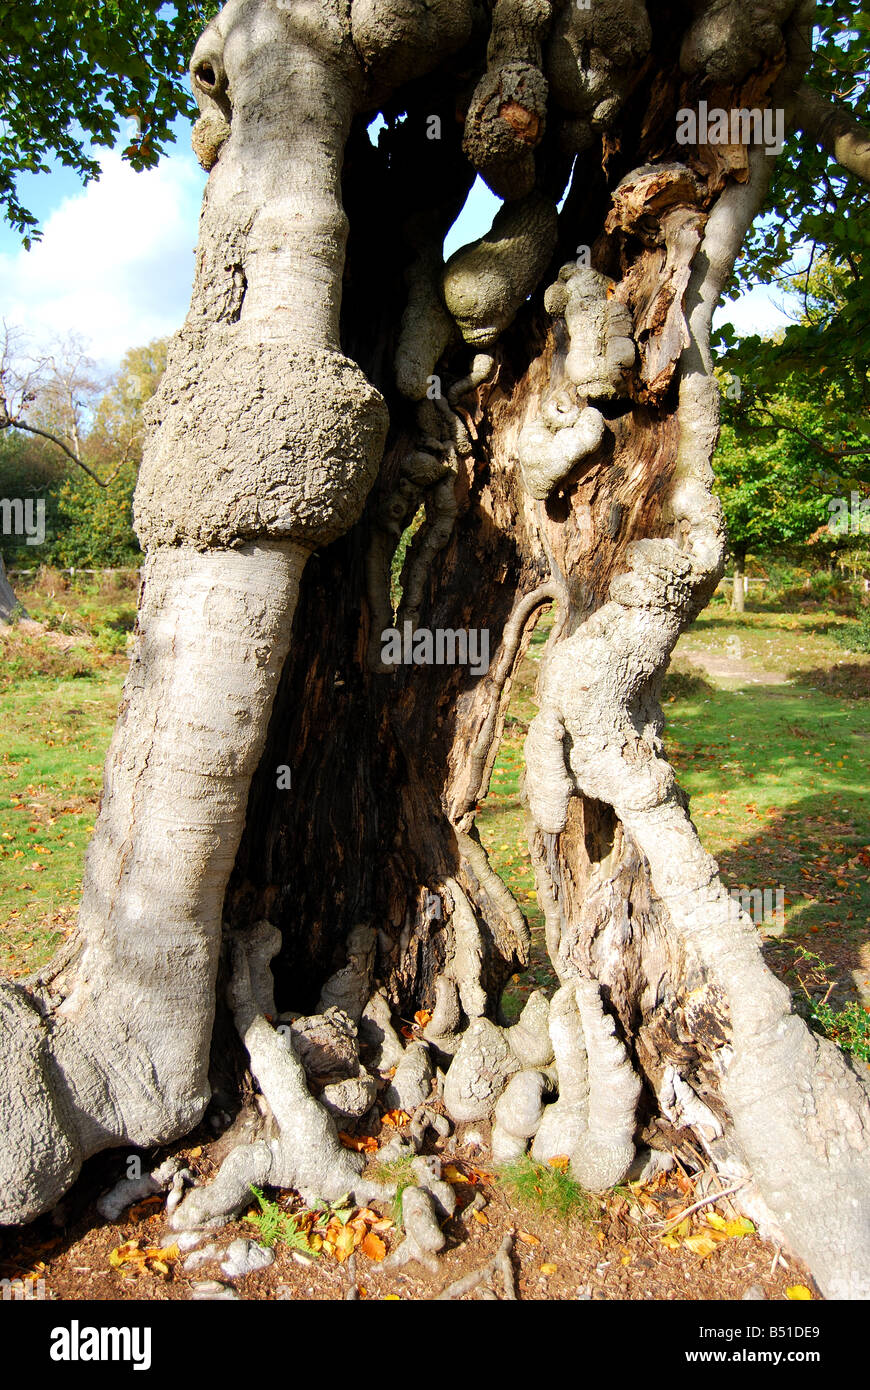 Pollarded beech trees in autumn, Burnham Beeches, Burnham, Buckinghamshire, England, United Kingdom Stock Photo